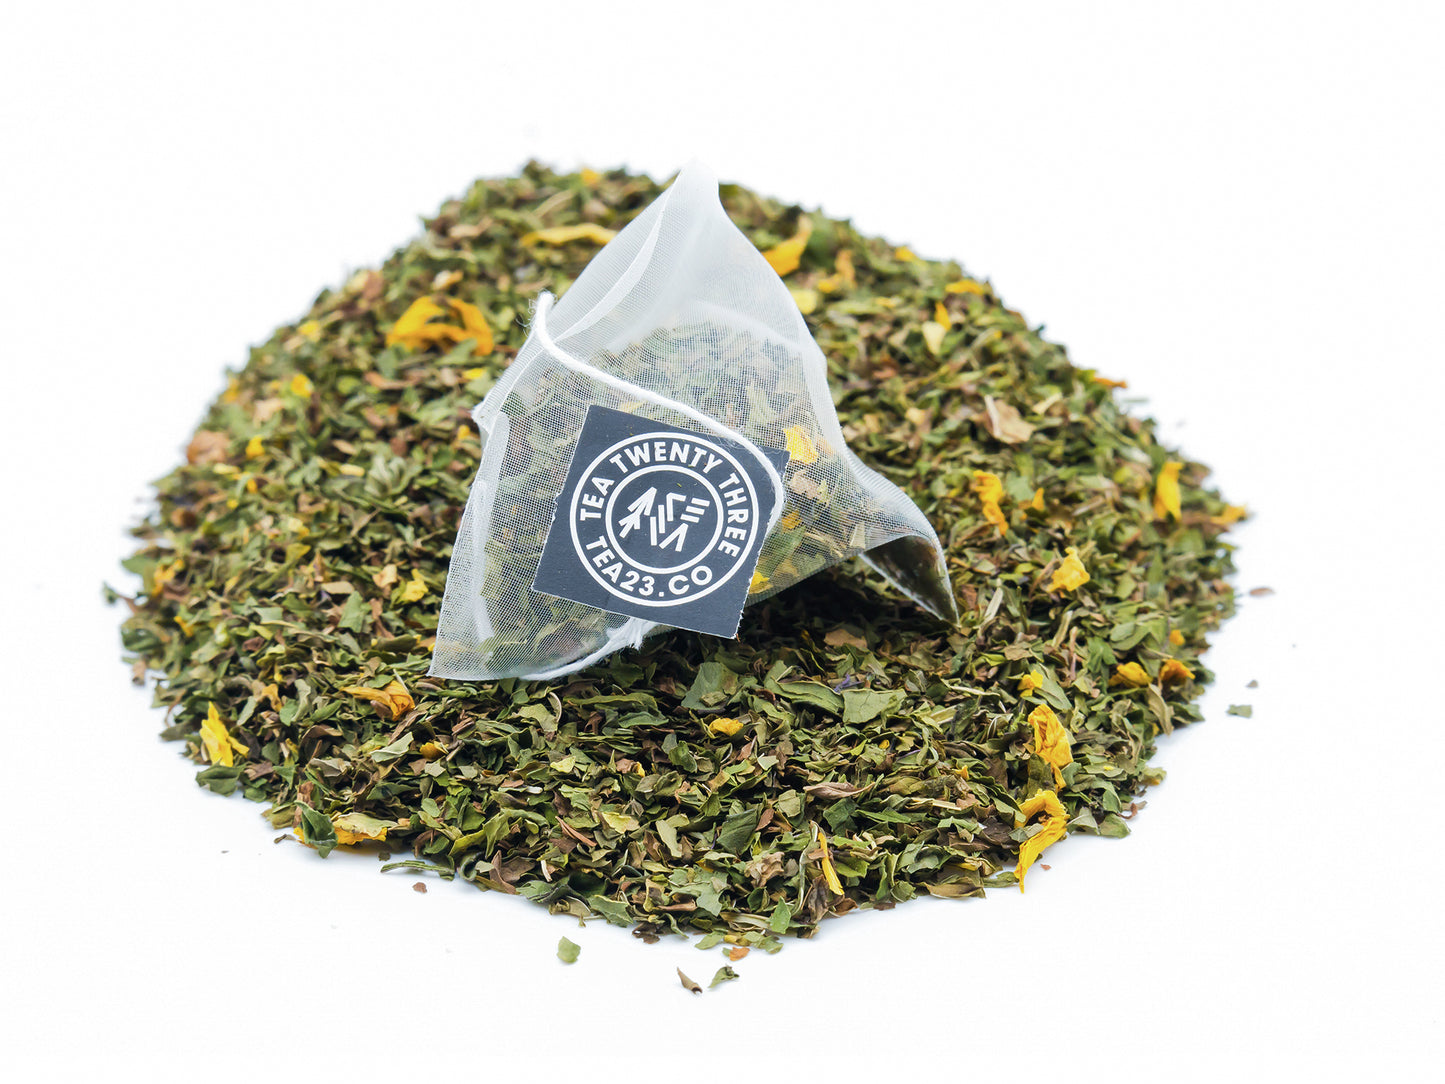 A Mint Tea pyramid tea bag from TEA23 sits on a pile of mint tea